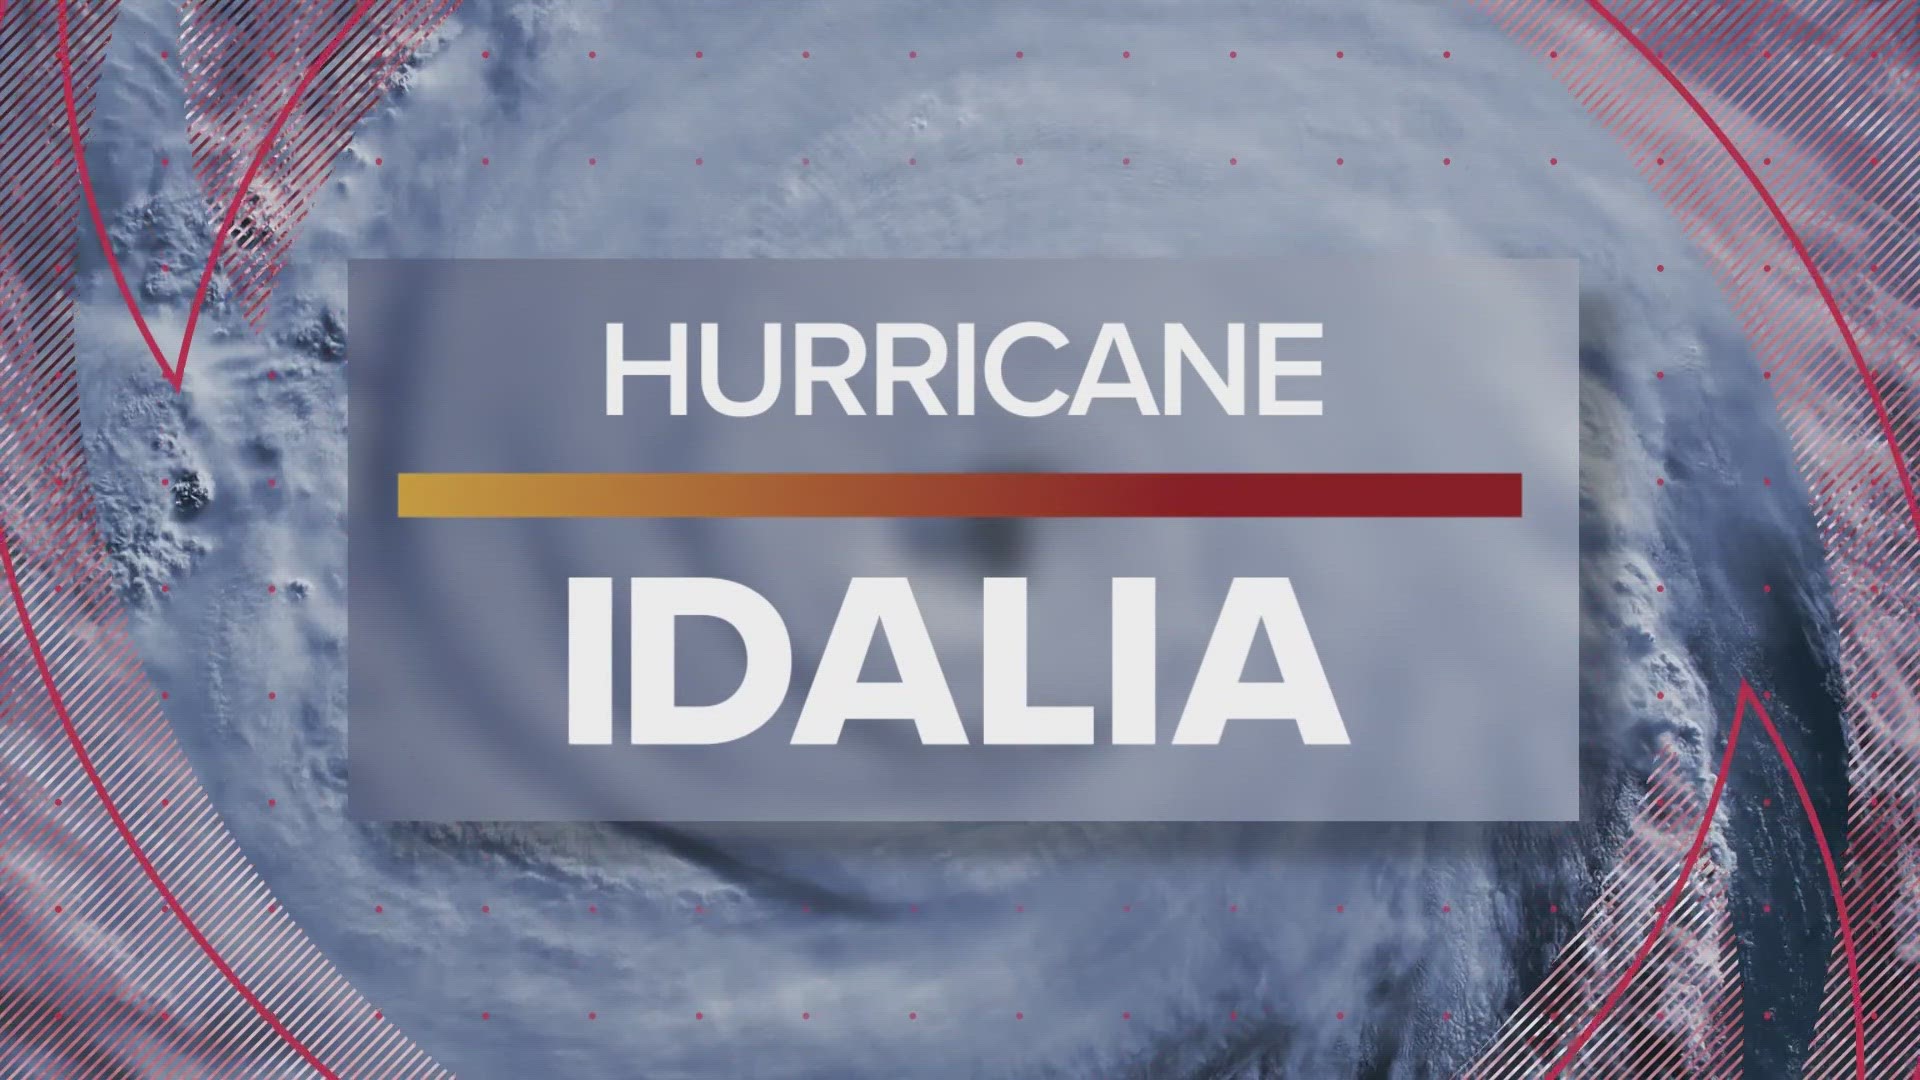 Hurricane Idalia made landfall Wednesday morning near Keaton Beach as a Category 3 storm. Damage could stretch 200 miles along Florida's west coast.